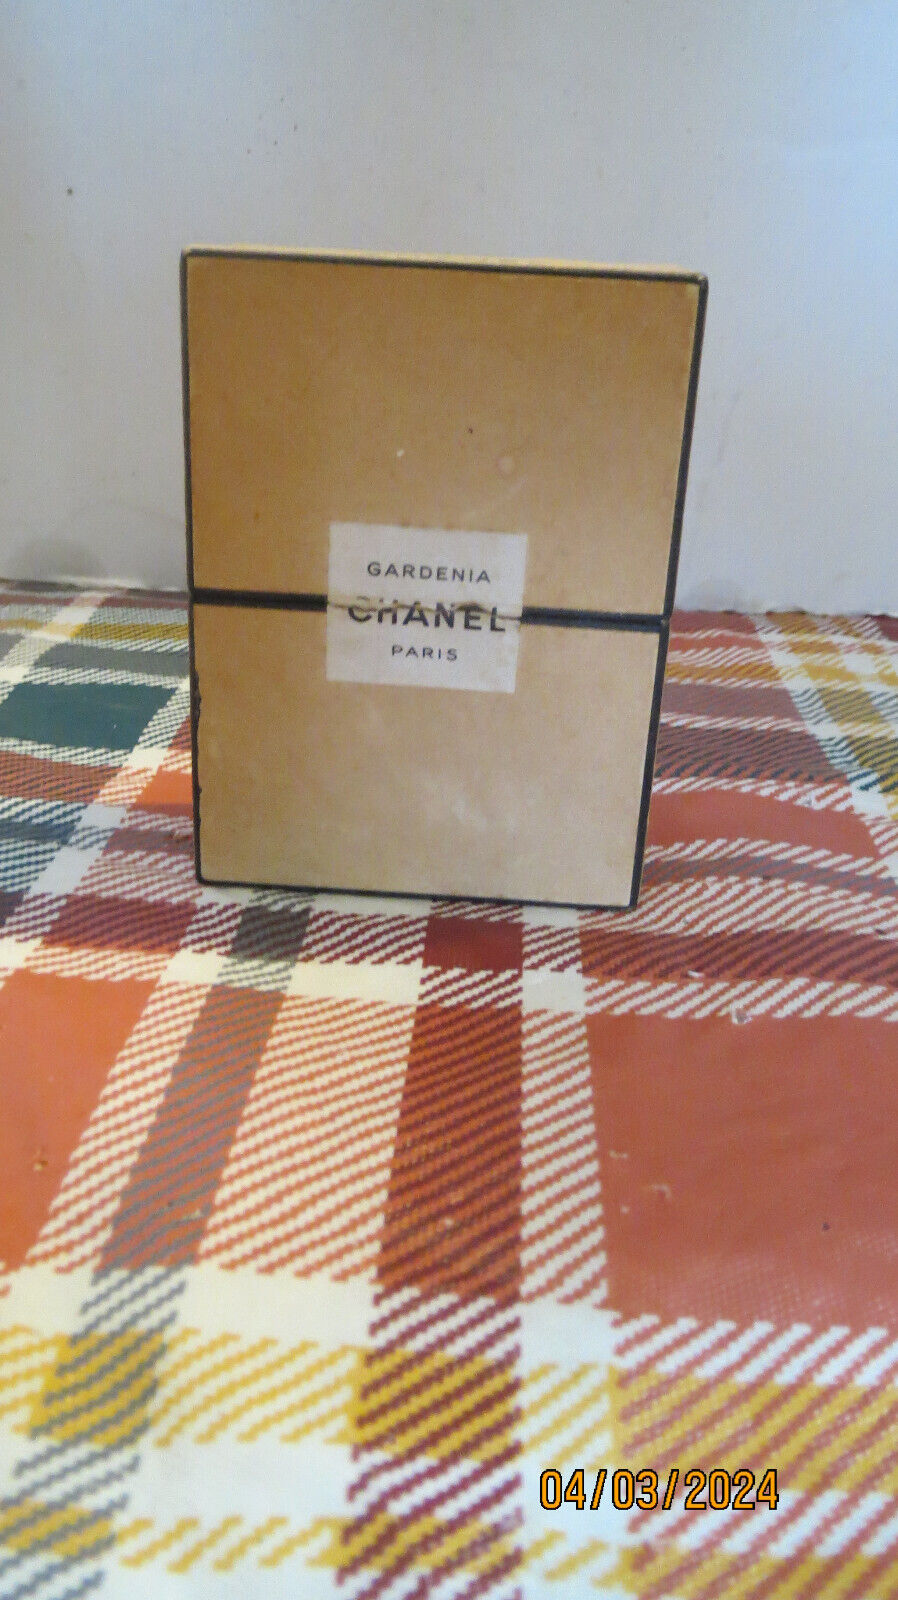 Vintage CHANEL Gardenia Parfum Extrait PM No. 201 France